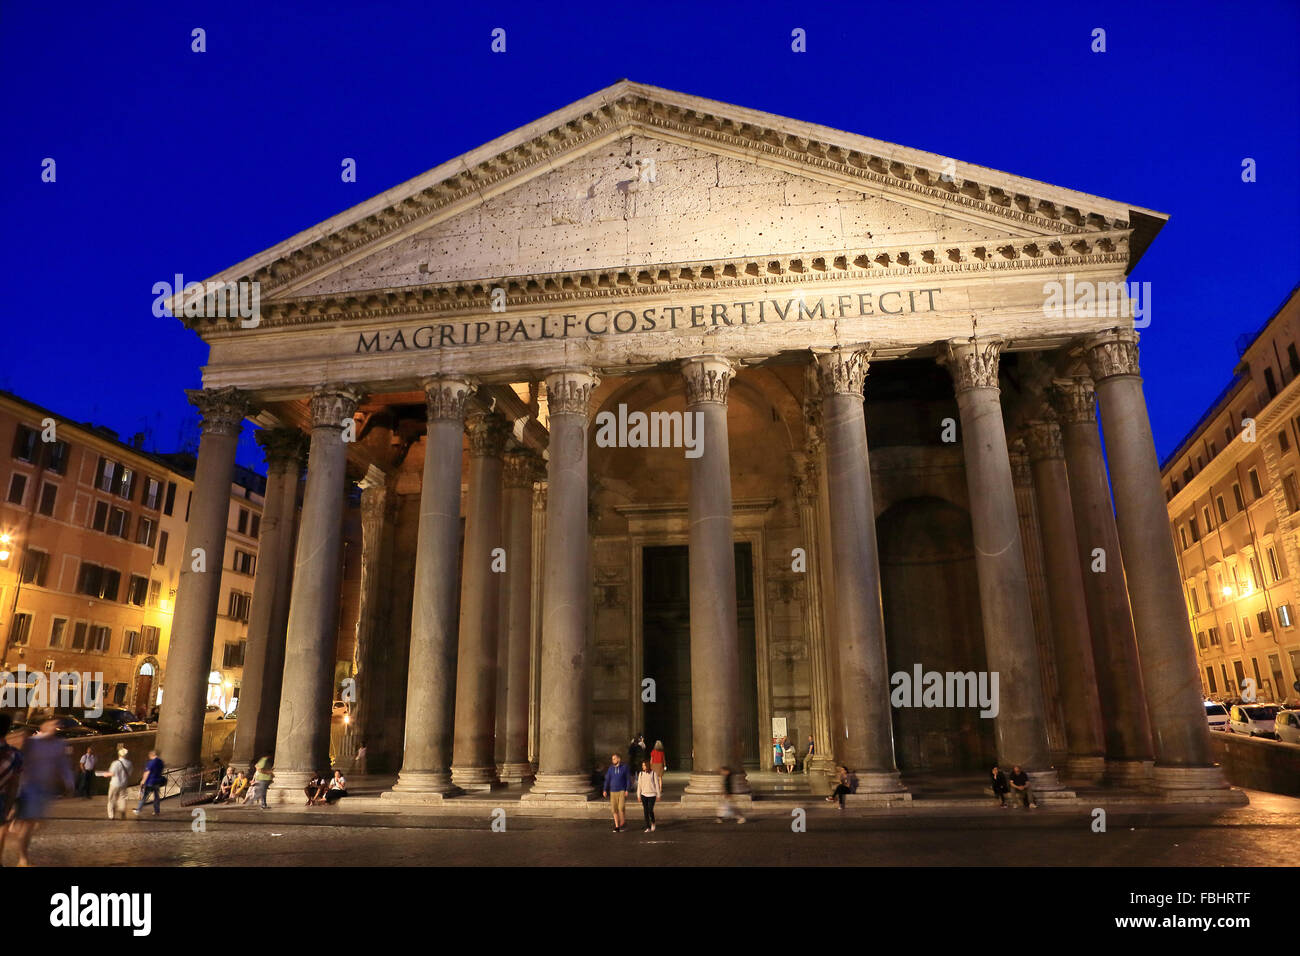 The Pantheon at dusk, Piazza della Rotonda, Rome, Italy. Stock Photo